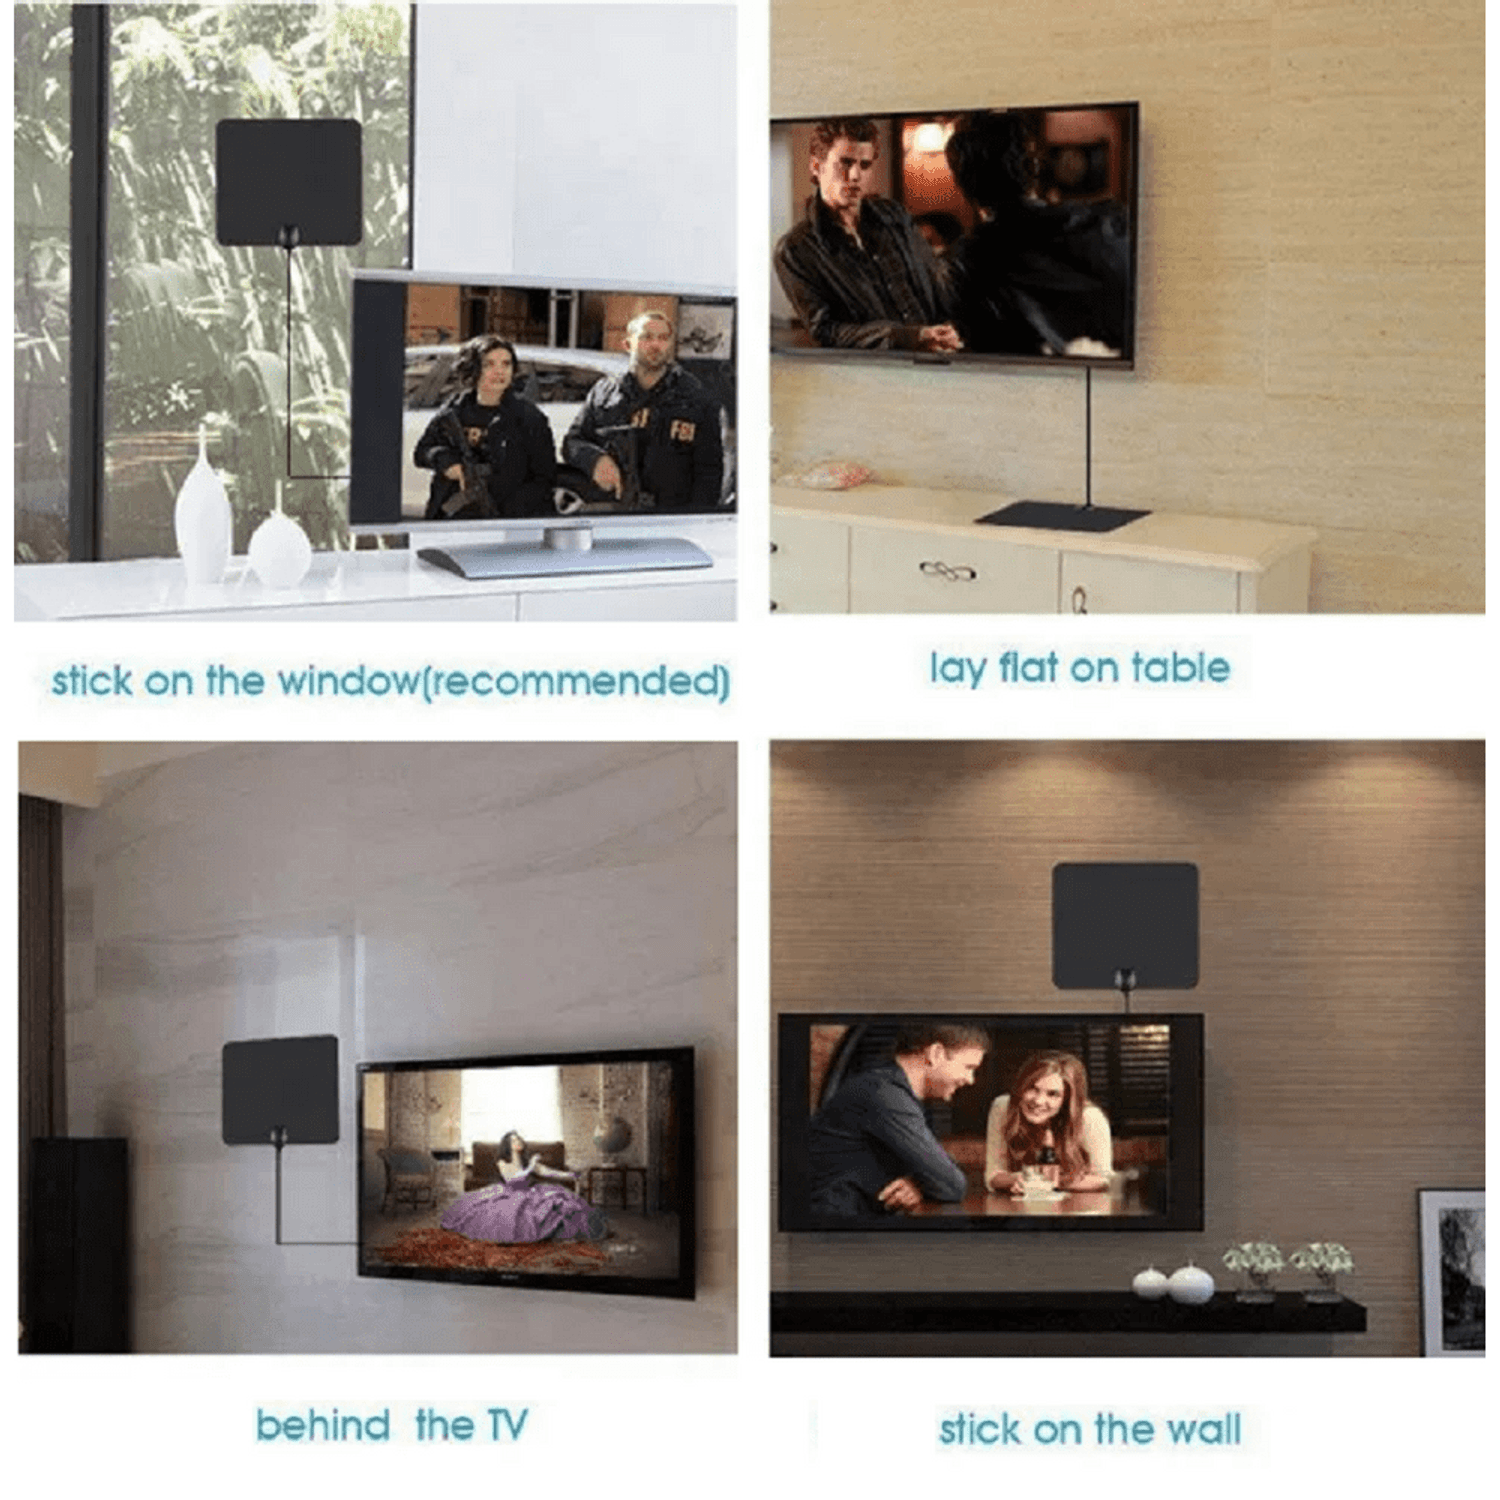 Antena Digital Exterior para TV - Oechsle